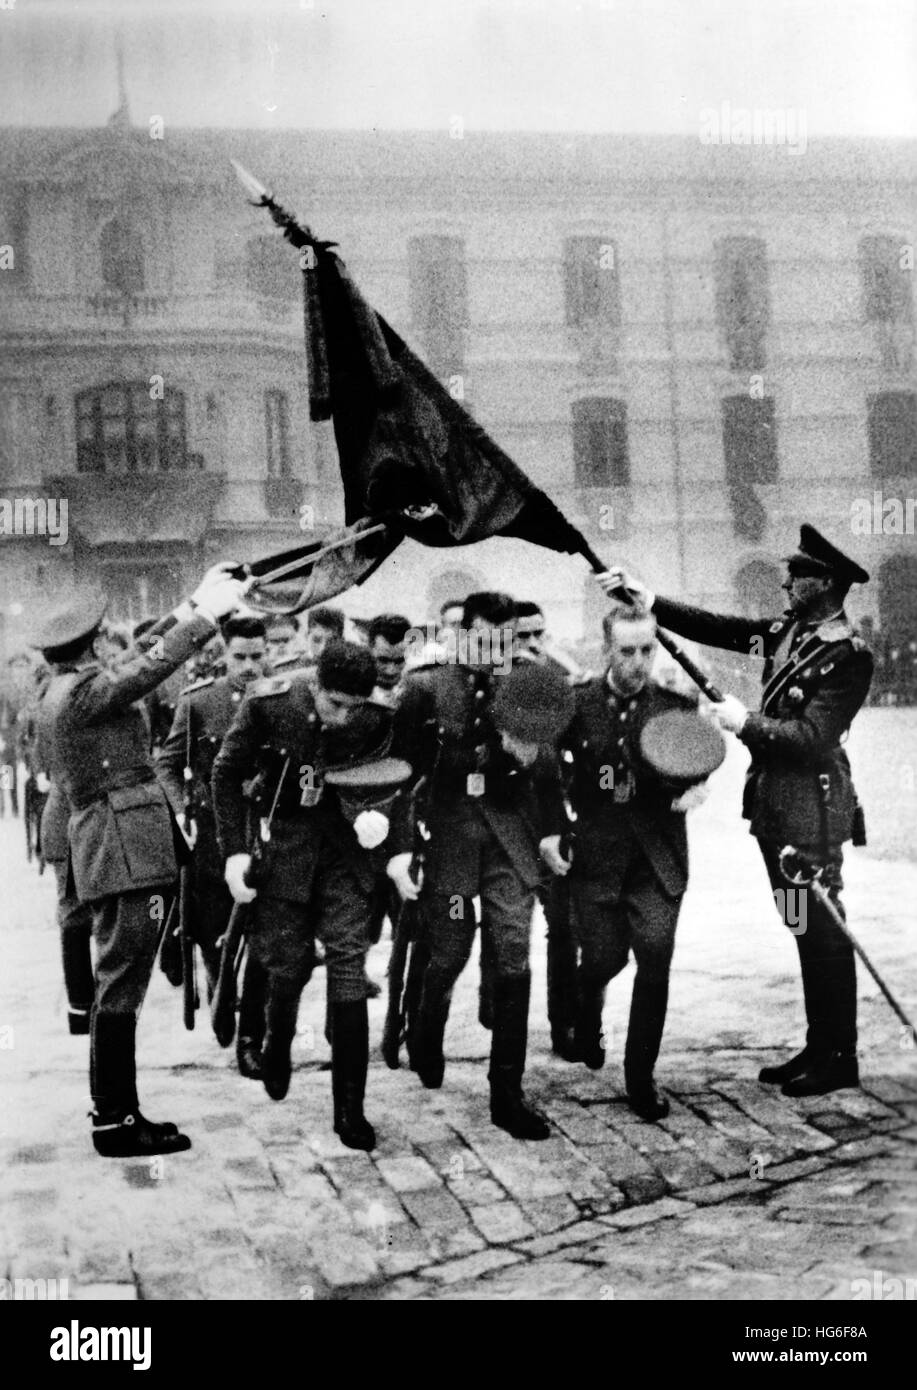 The Nazi propaganda picture shows the solemn handover of a flag to the Military Academy in Saragossa, Spain, December 1942. Fotoarchiv für Zeitgeschichtee - NO WIRE SERVICE - | usage worldwide Stock Photo